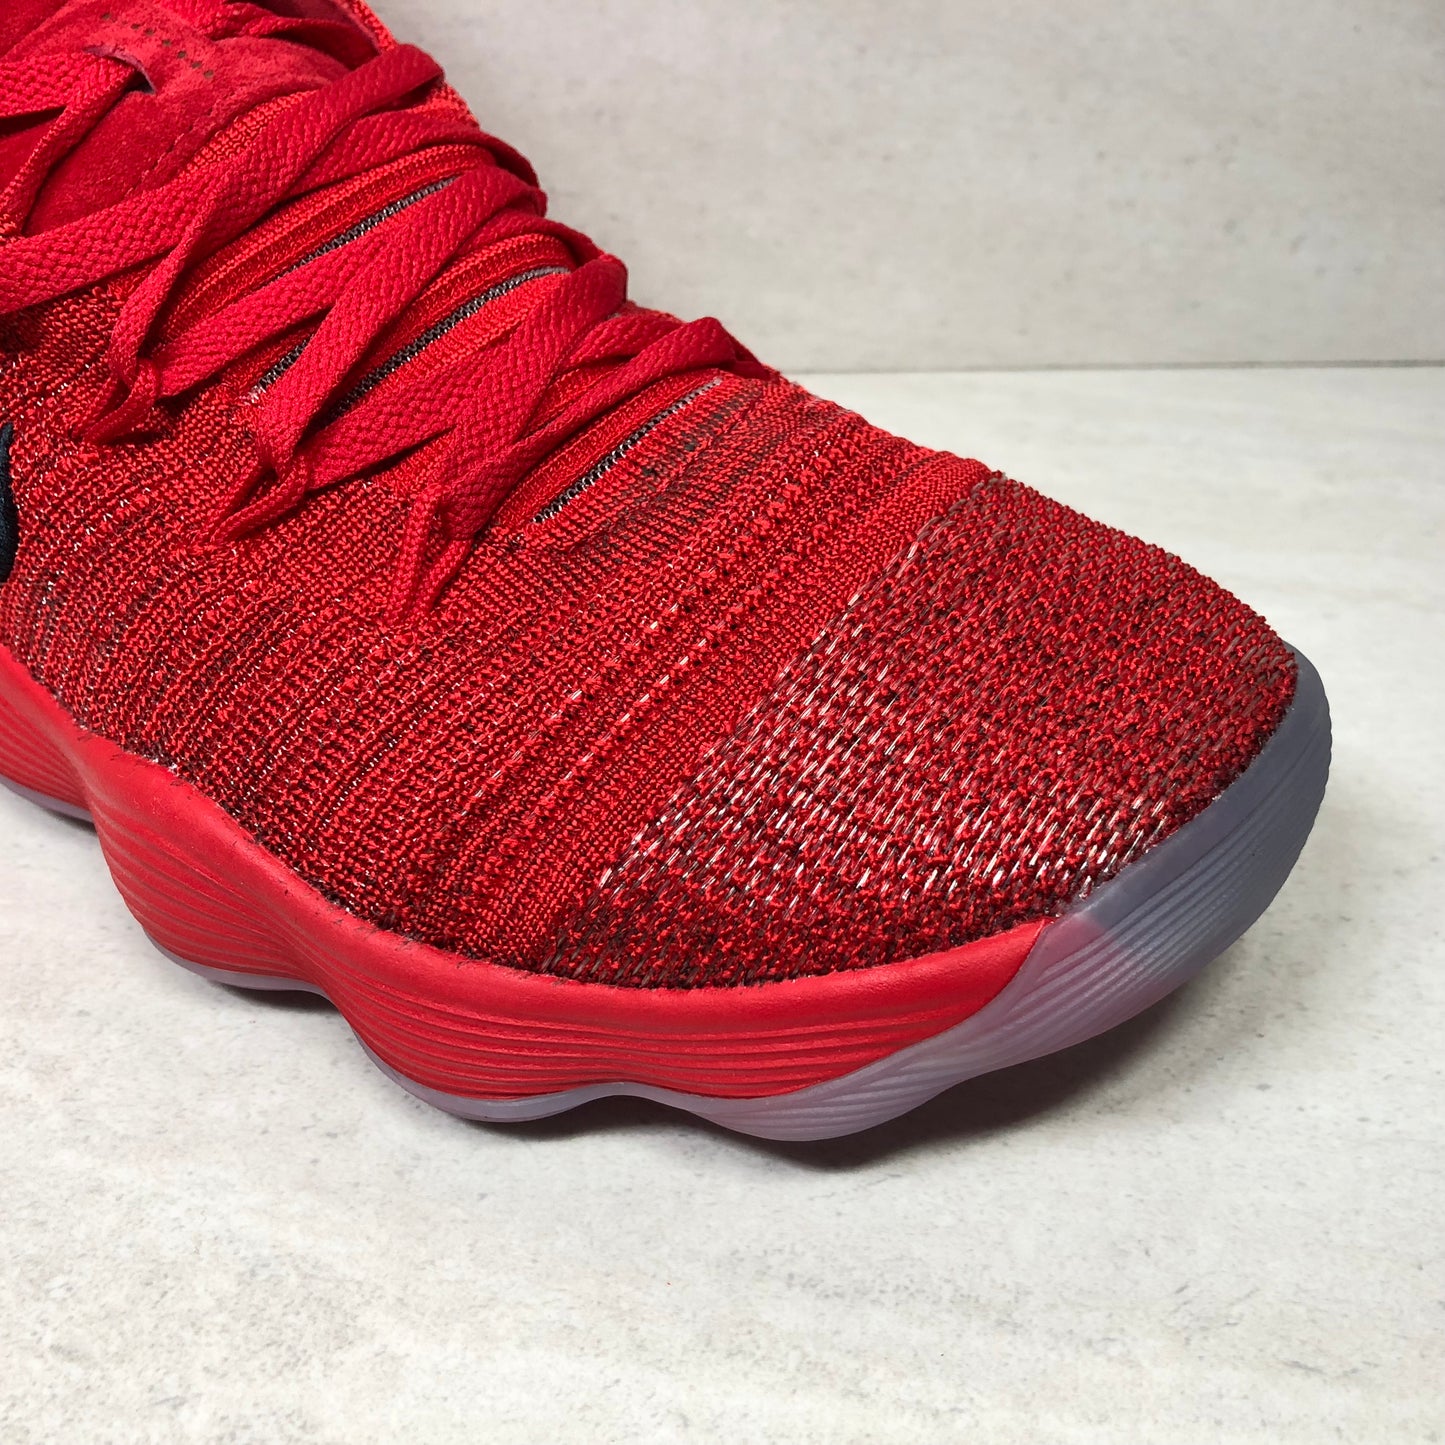 Nike Basketball Hyperdunk 2017 - 897636 600 - Homme Taille 11 - Rouge/Noir